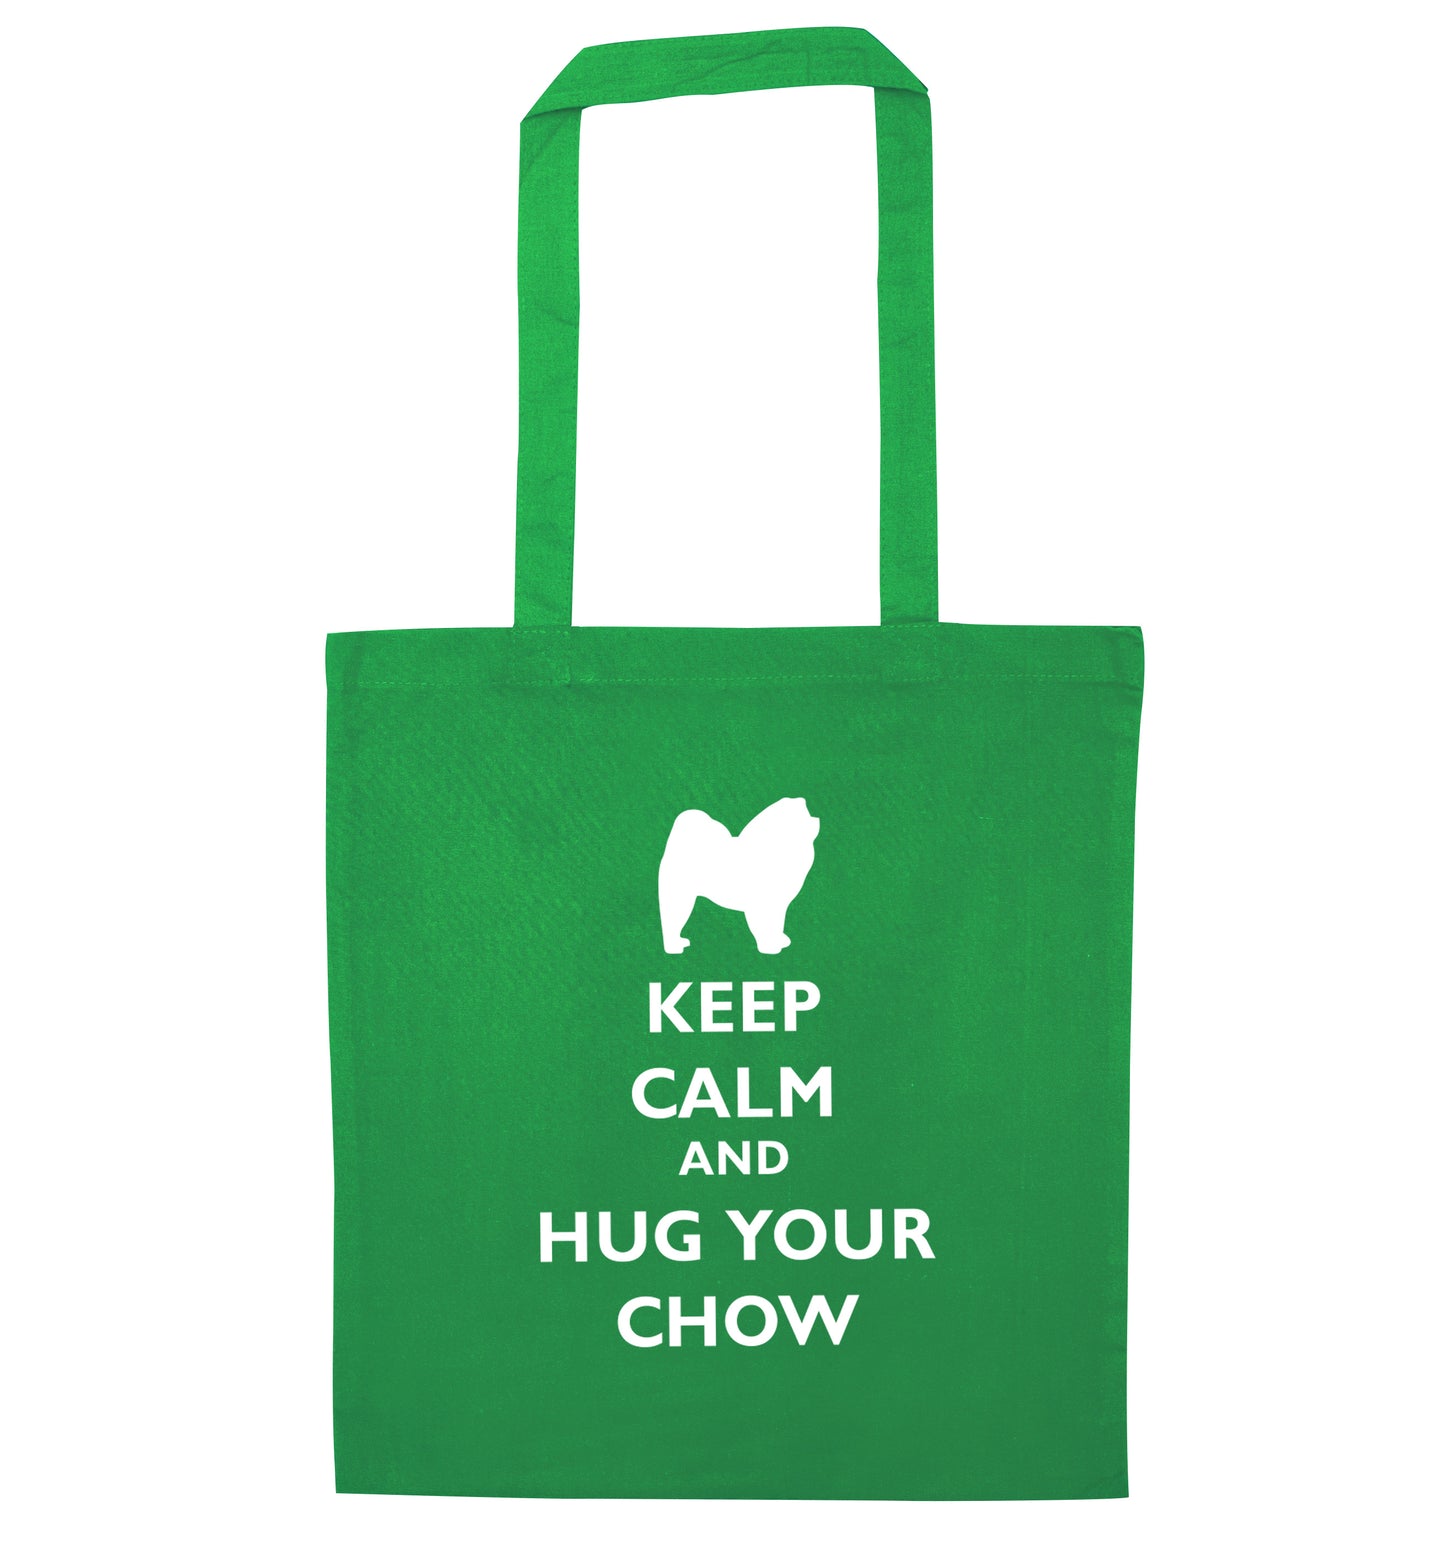 Keep calm and hug your chow green tote bag